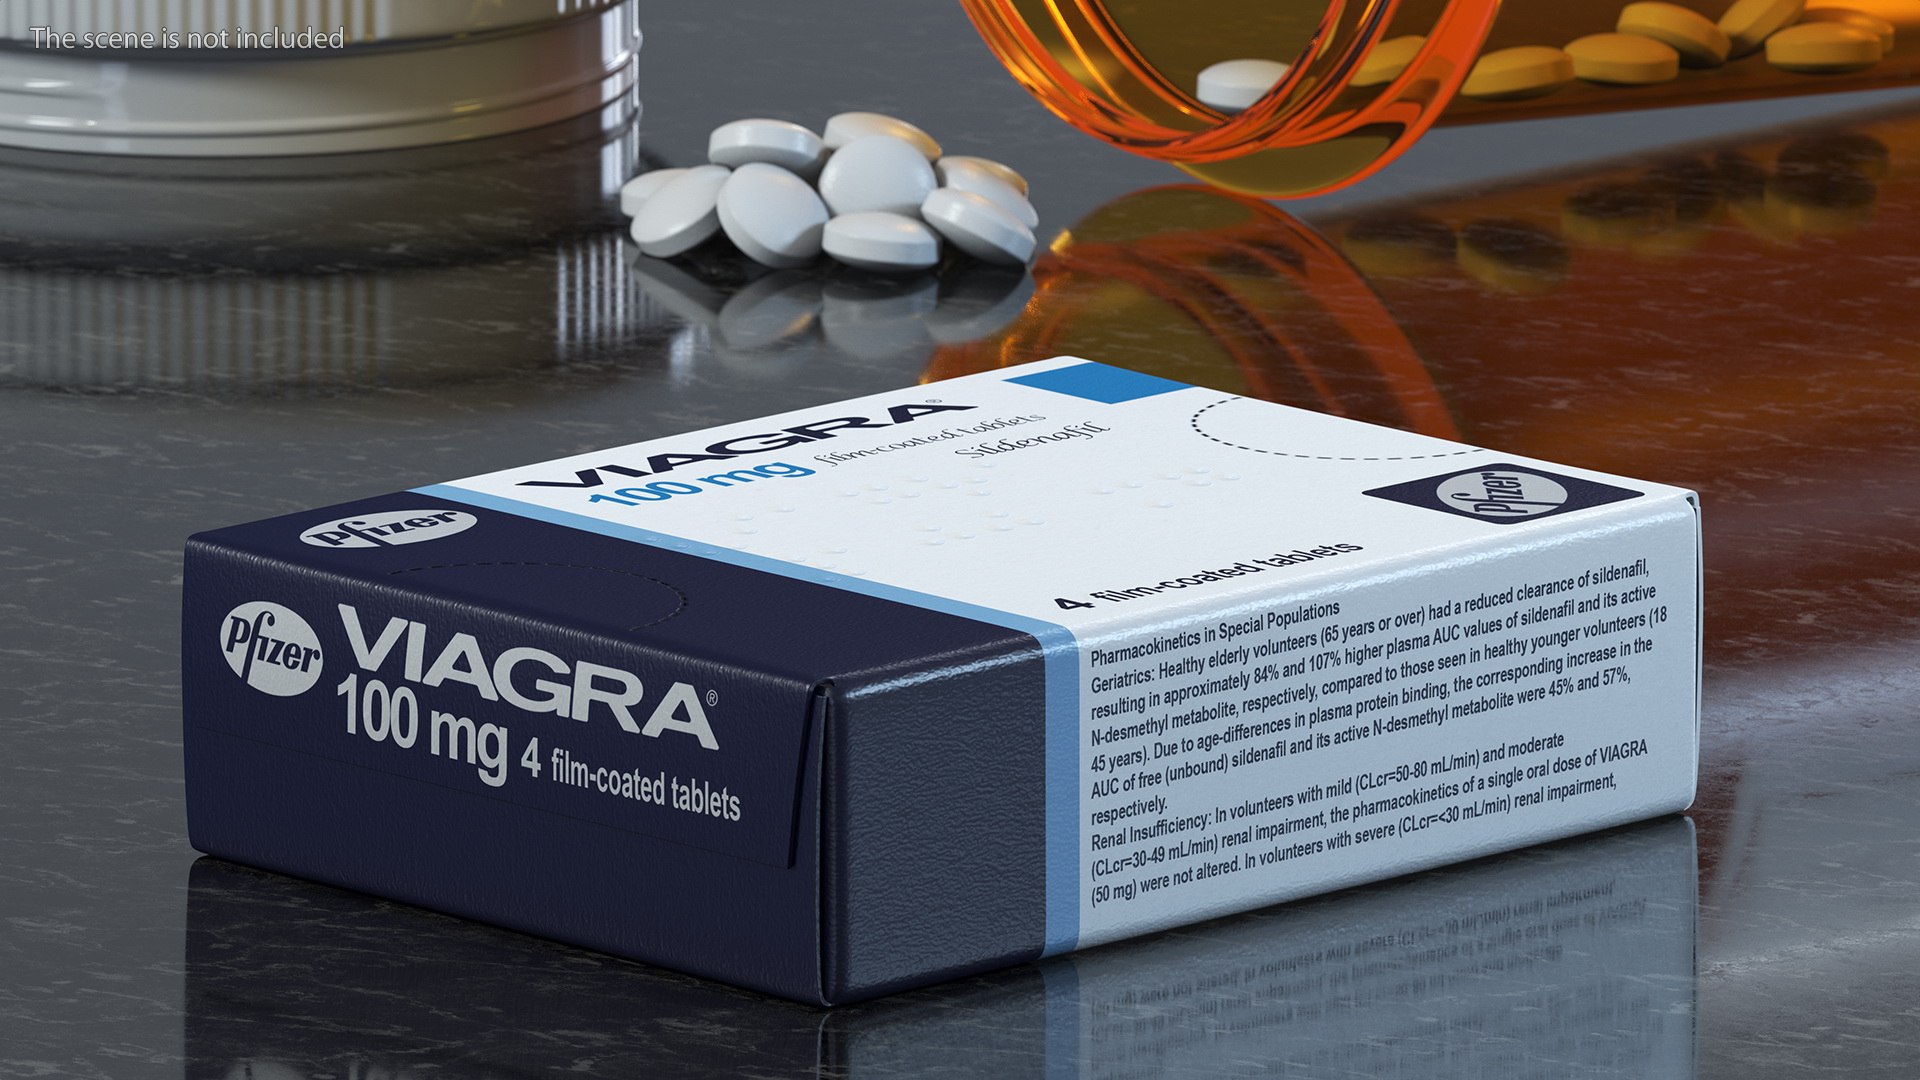 Viagra In Pakistan 100mg Original imported from Turkey